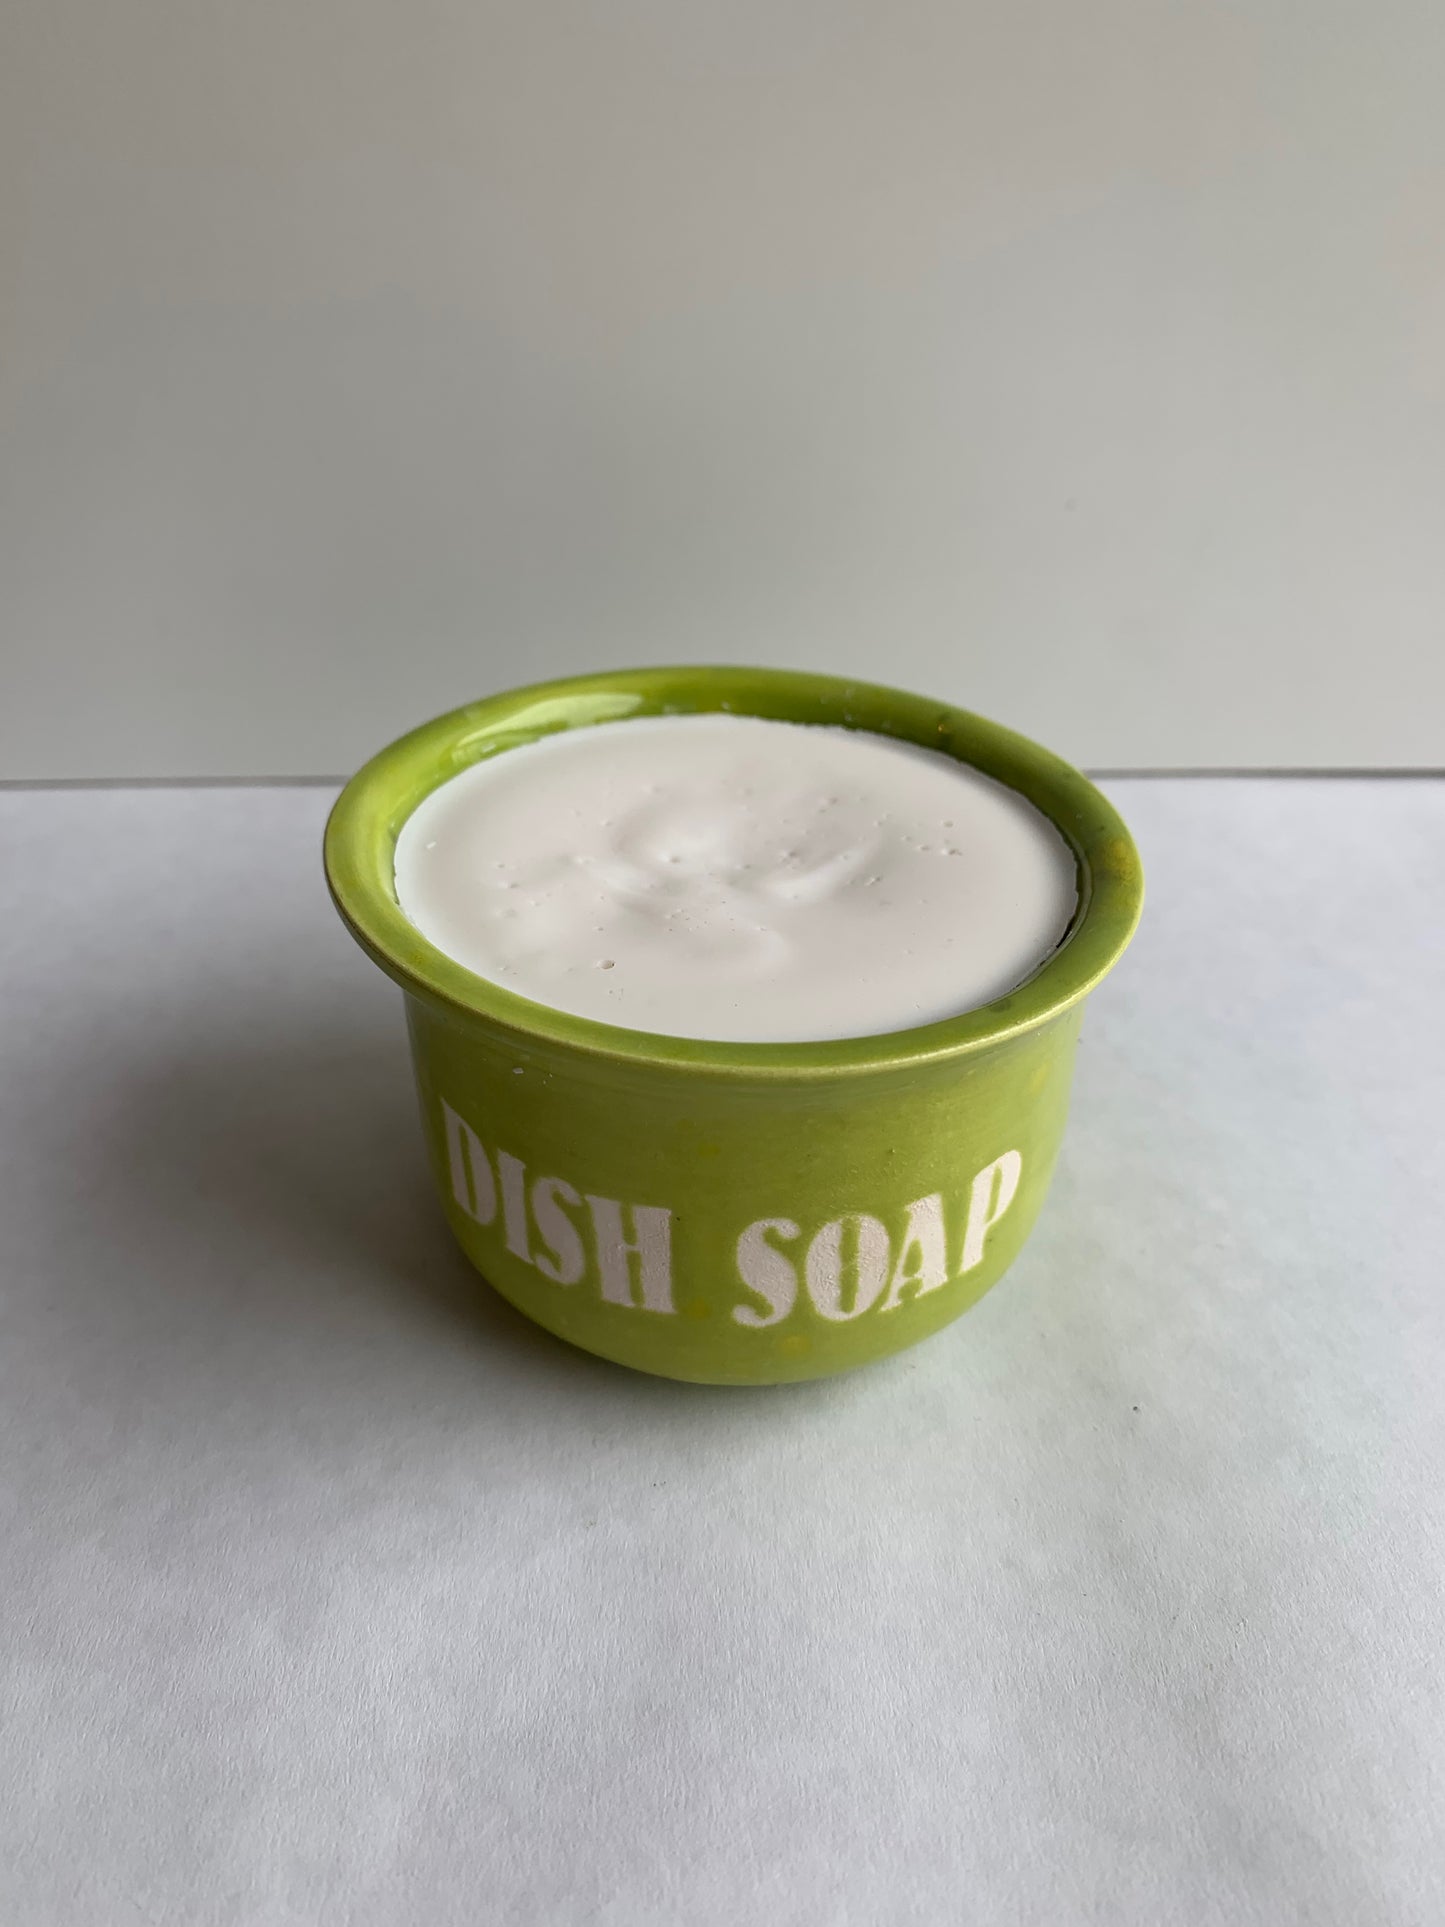 Dish Soap Ramekin - Bright Green Glaze with Stencil